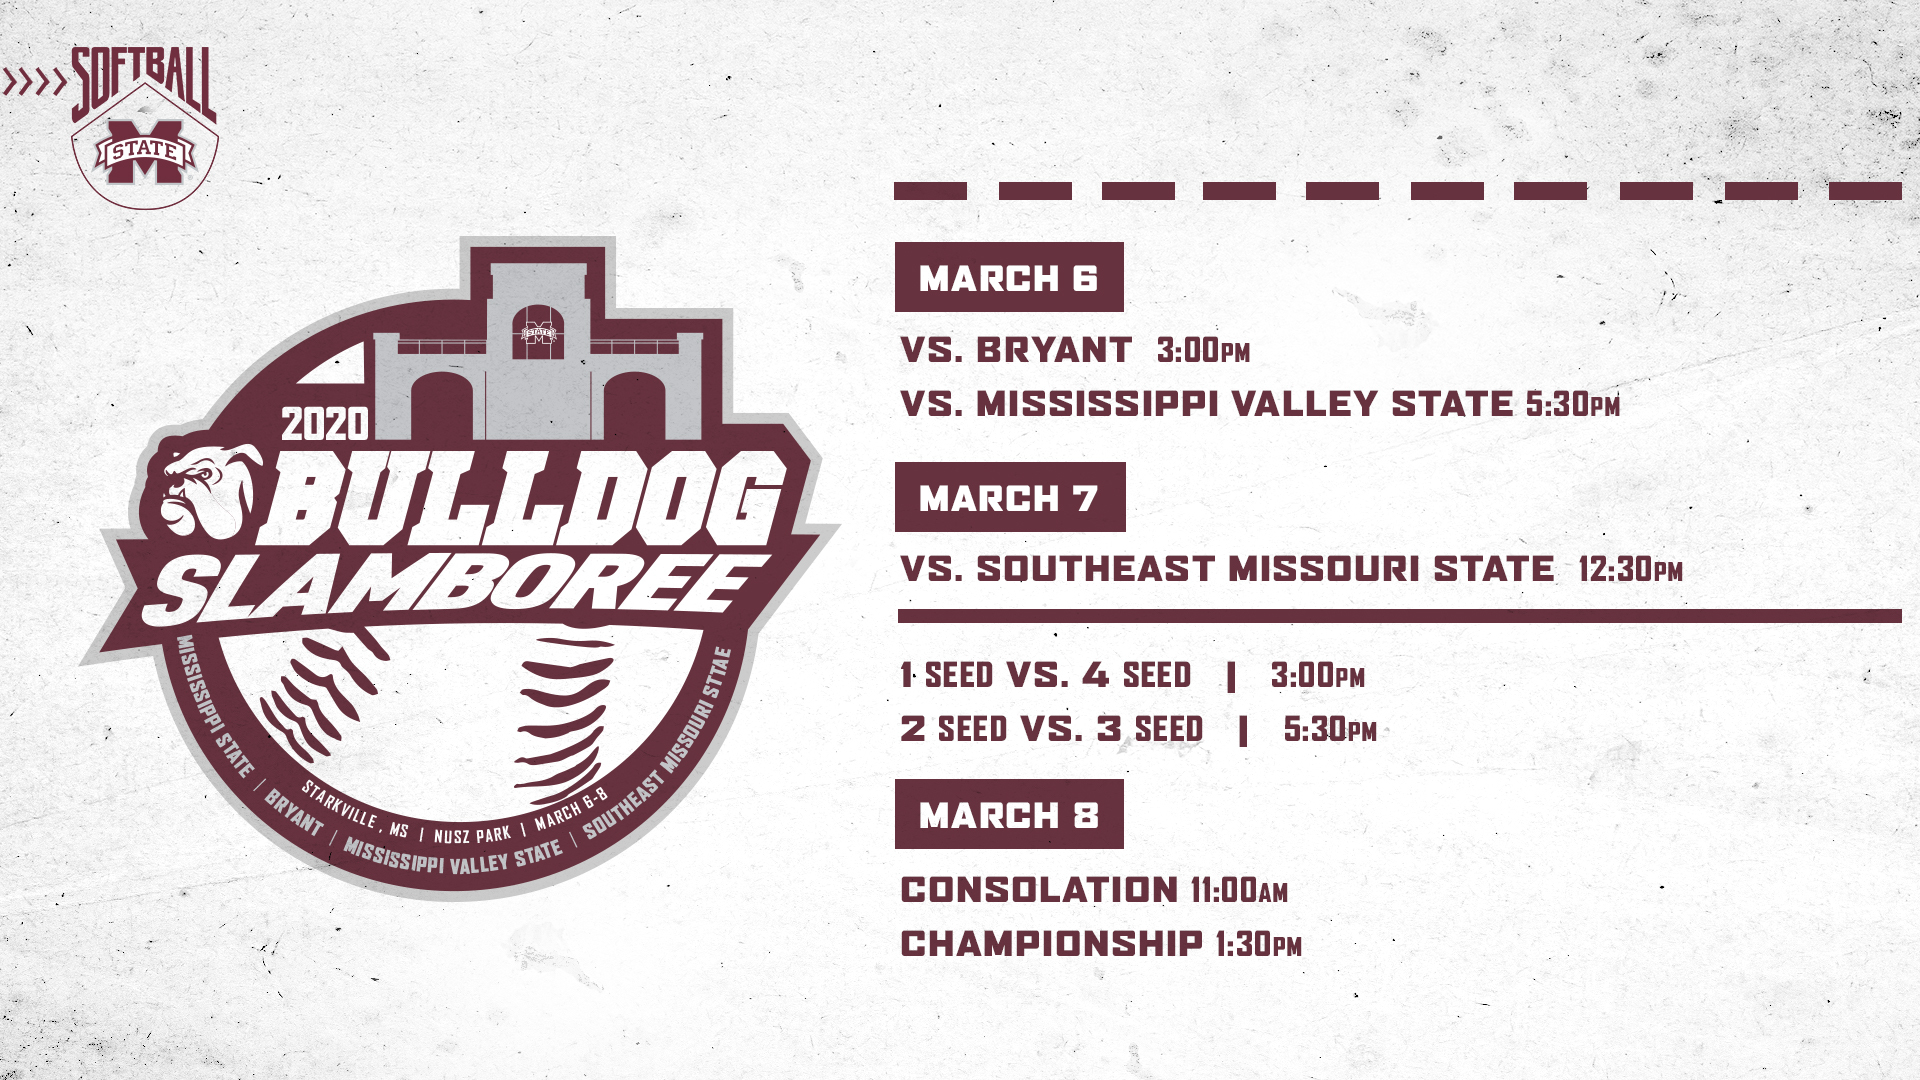 Promotional graphic for MSU Softball's Bulldog Slamboree